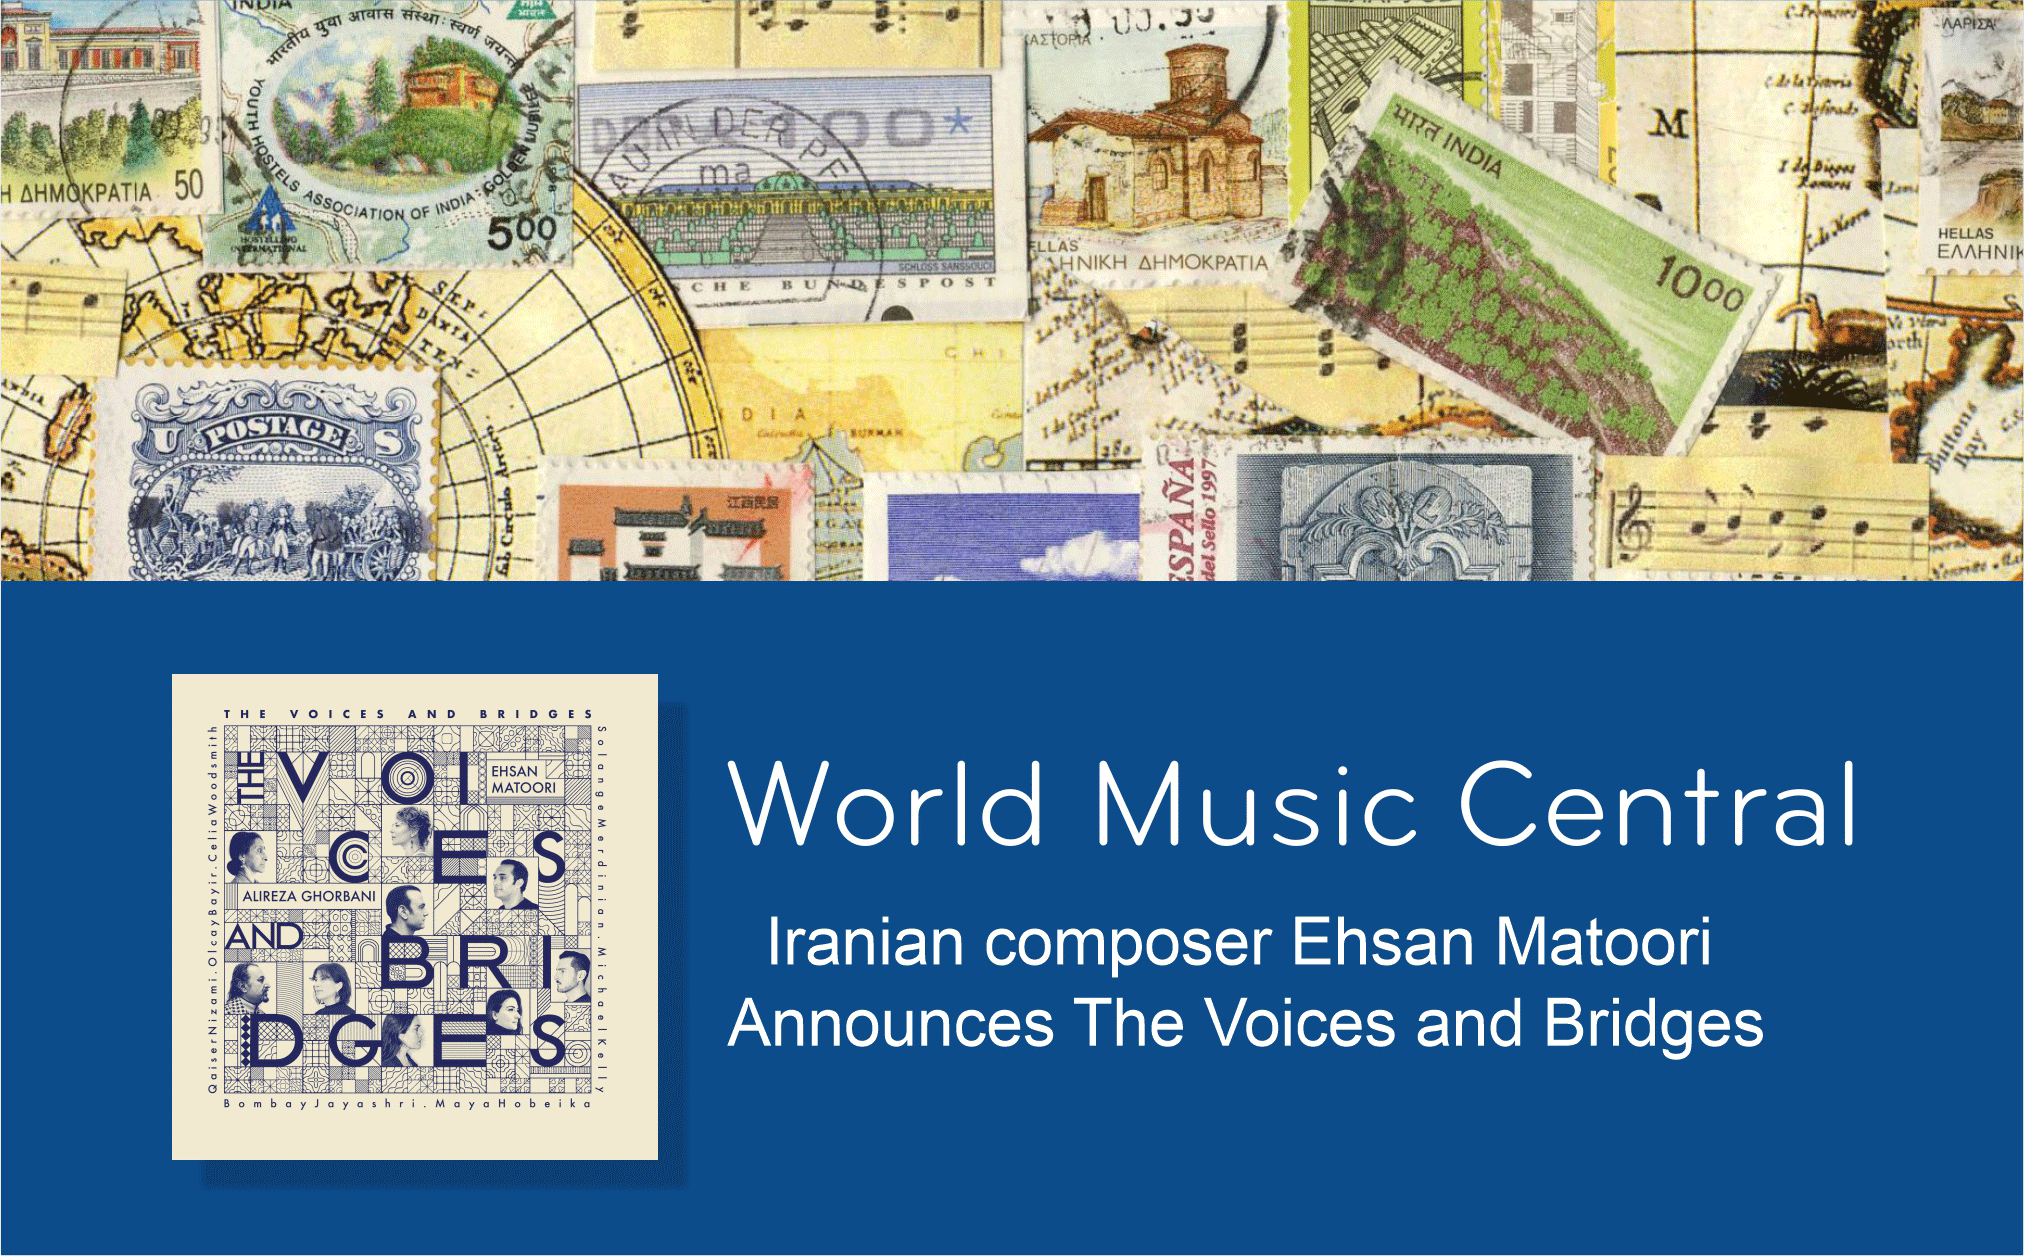 world music central: Iranian composer Ehsan Matoori Announces The Voices and Bridges